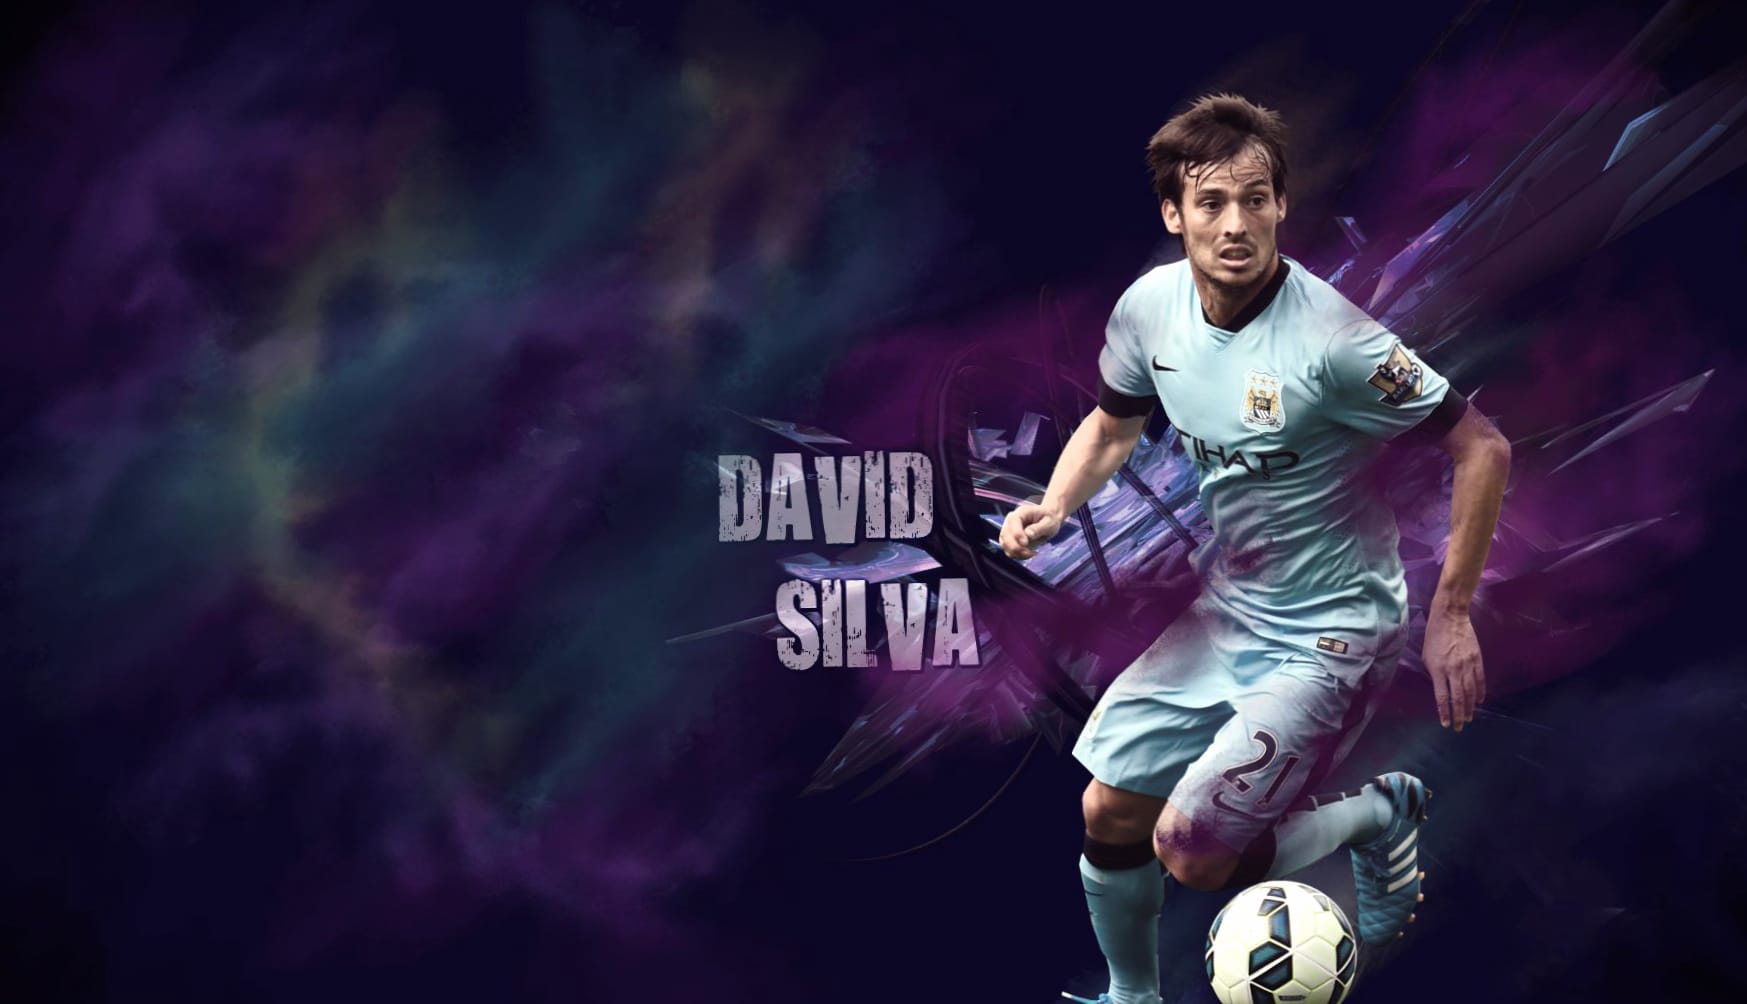 David Silva wallpapers HD quality